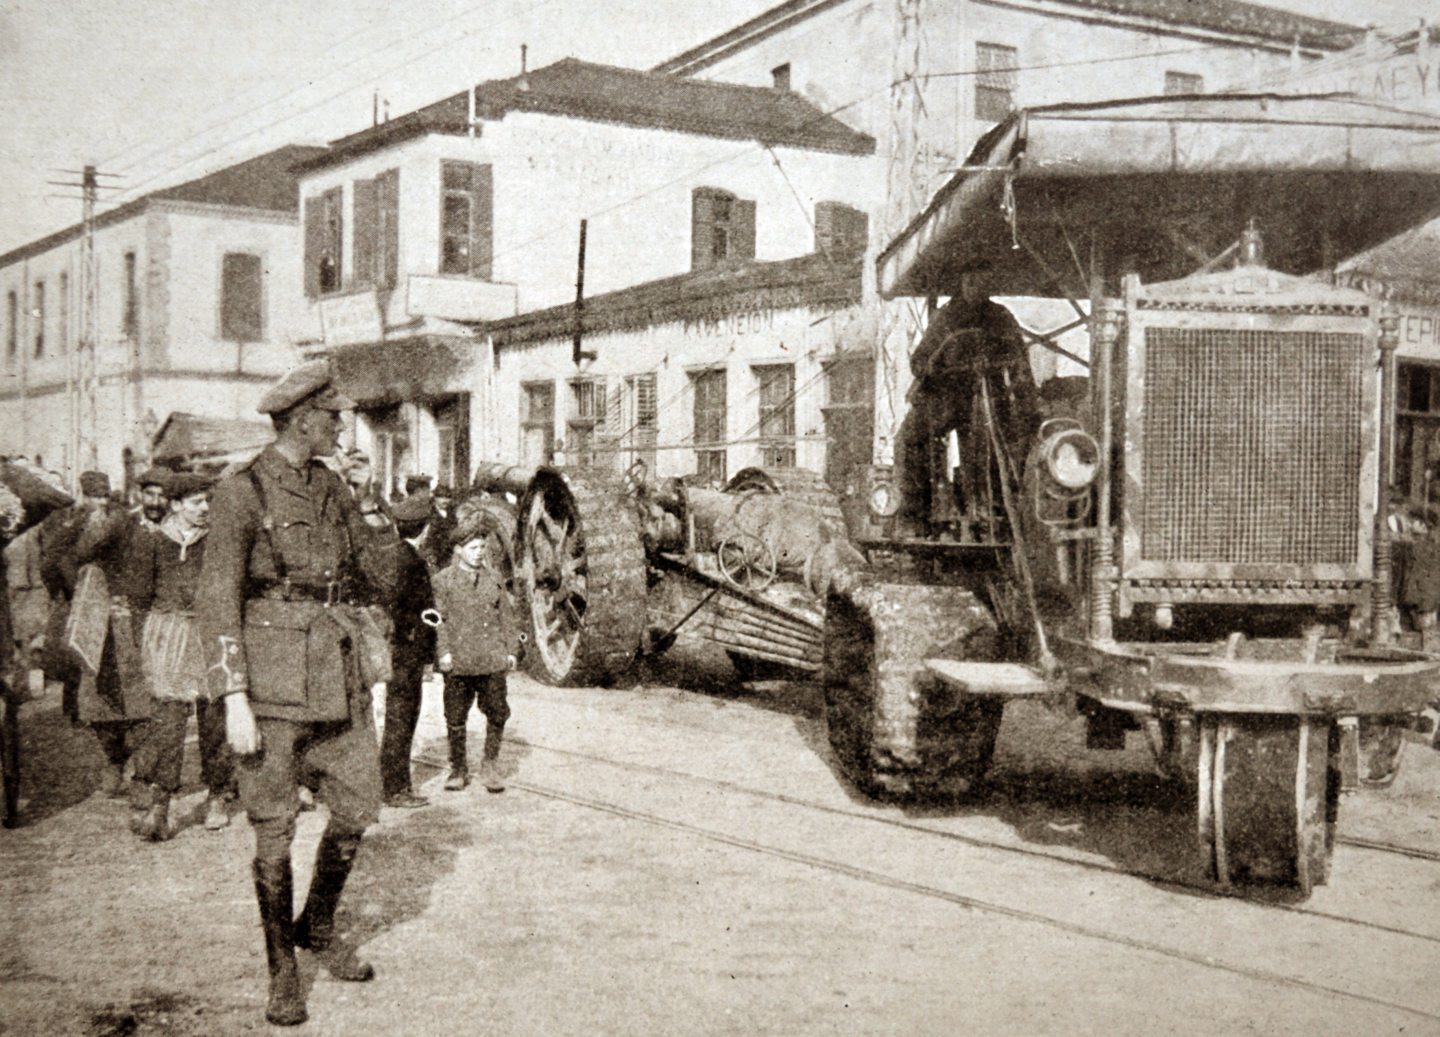 Holt Tractor hauling British artillery in Salonika, Greece during World War One, 1915. 